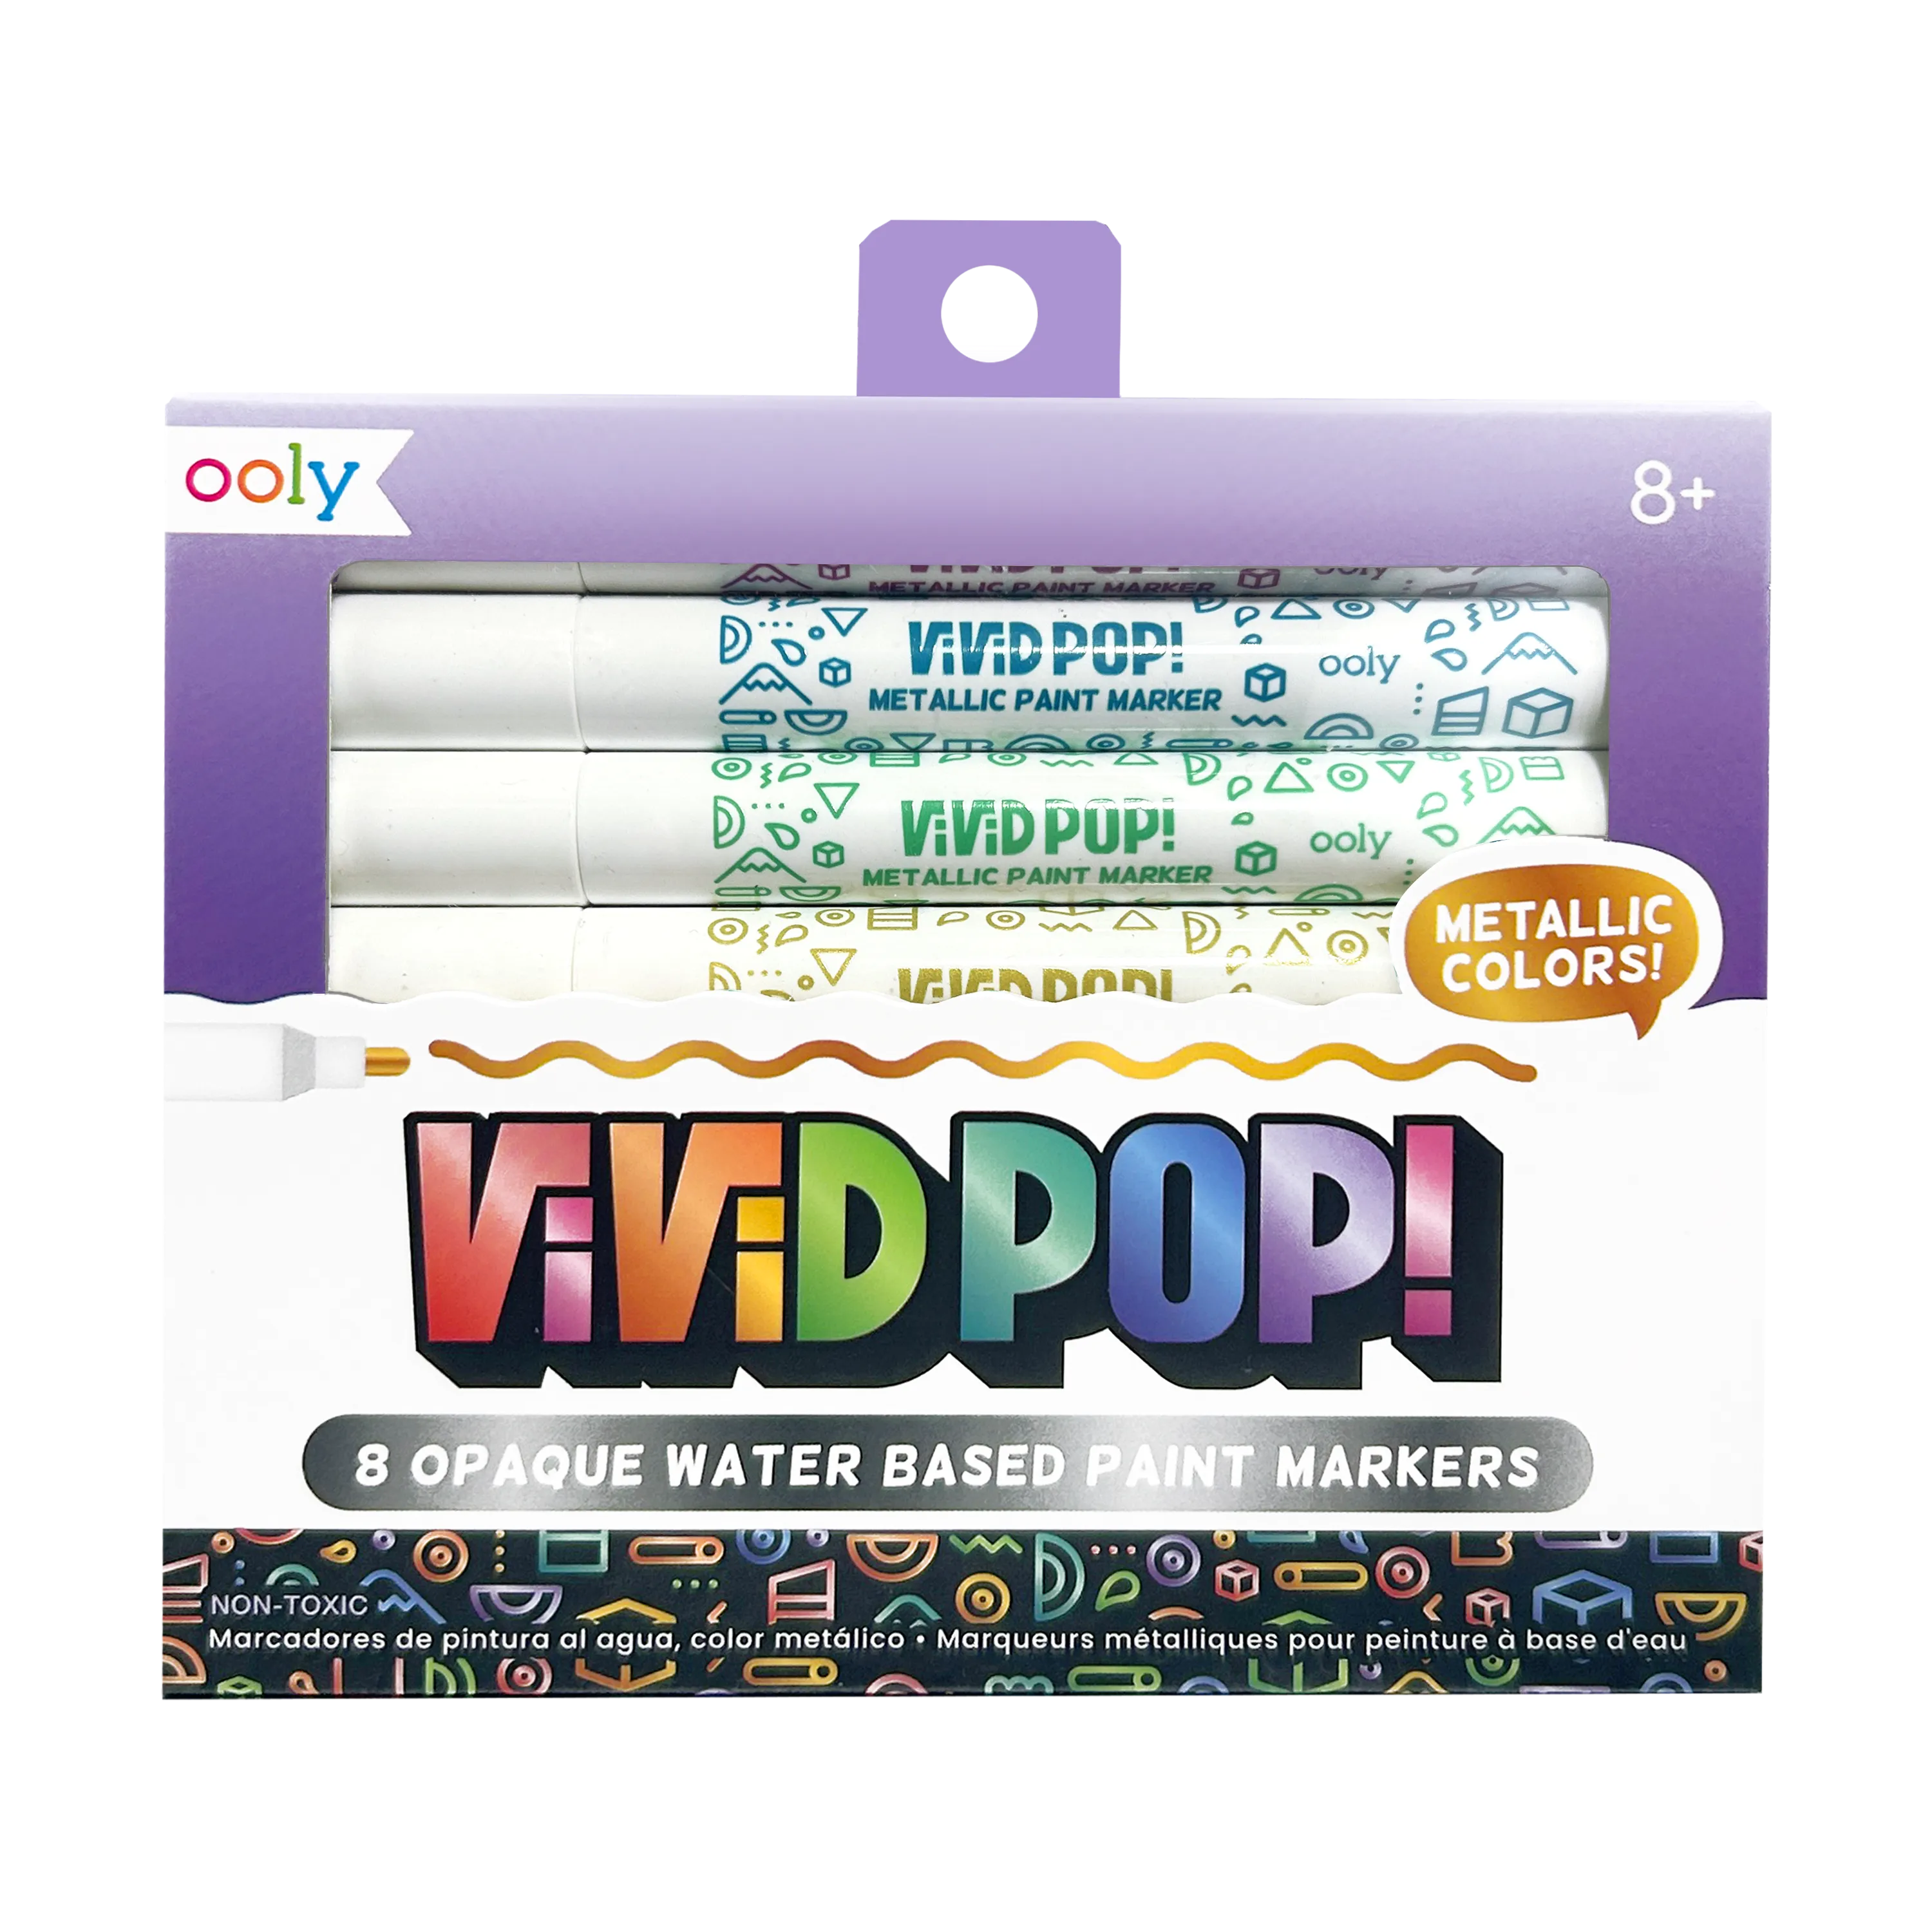 OOLY Vivid Pop! Water Based Paint Markers - Metallic front of packaging